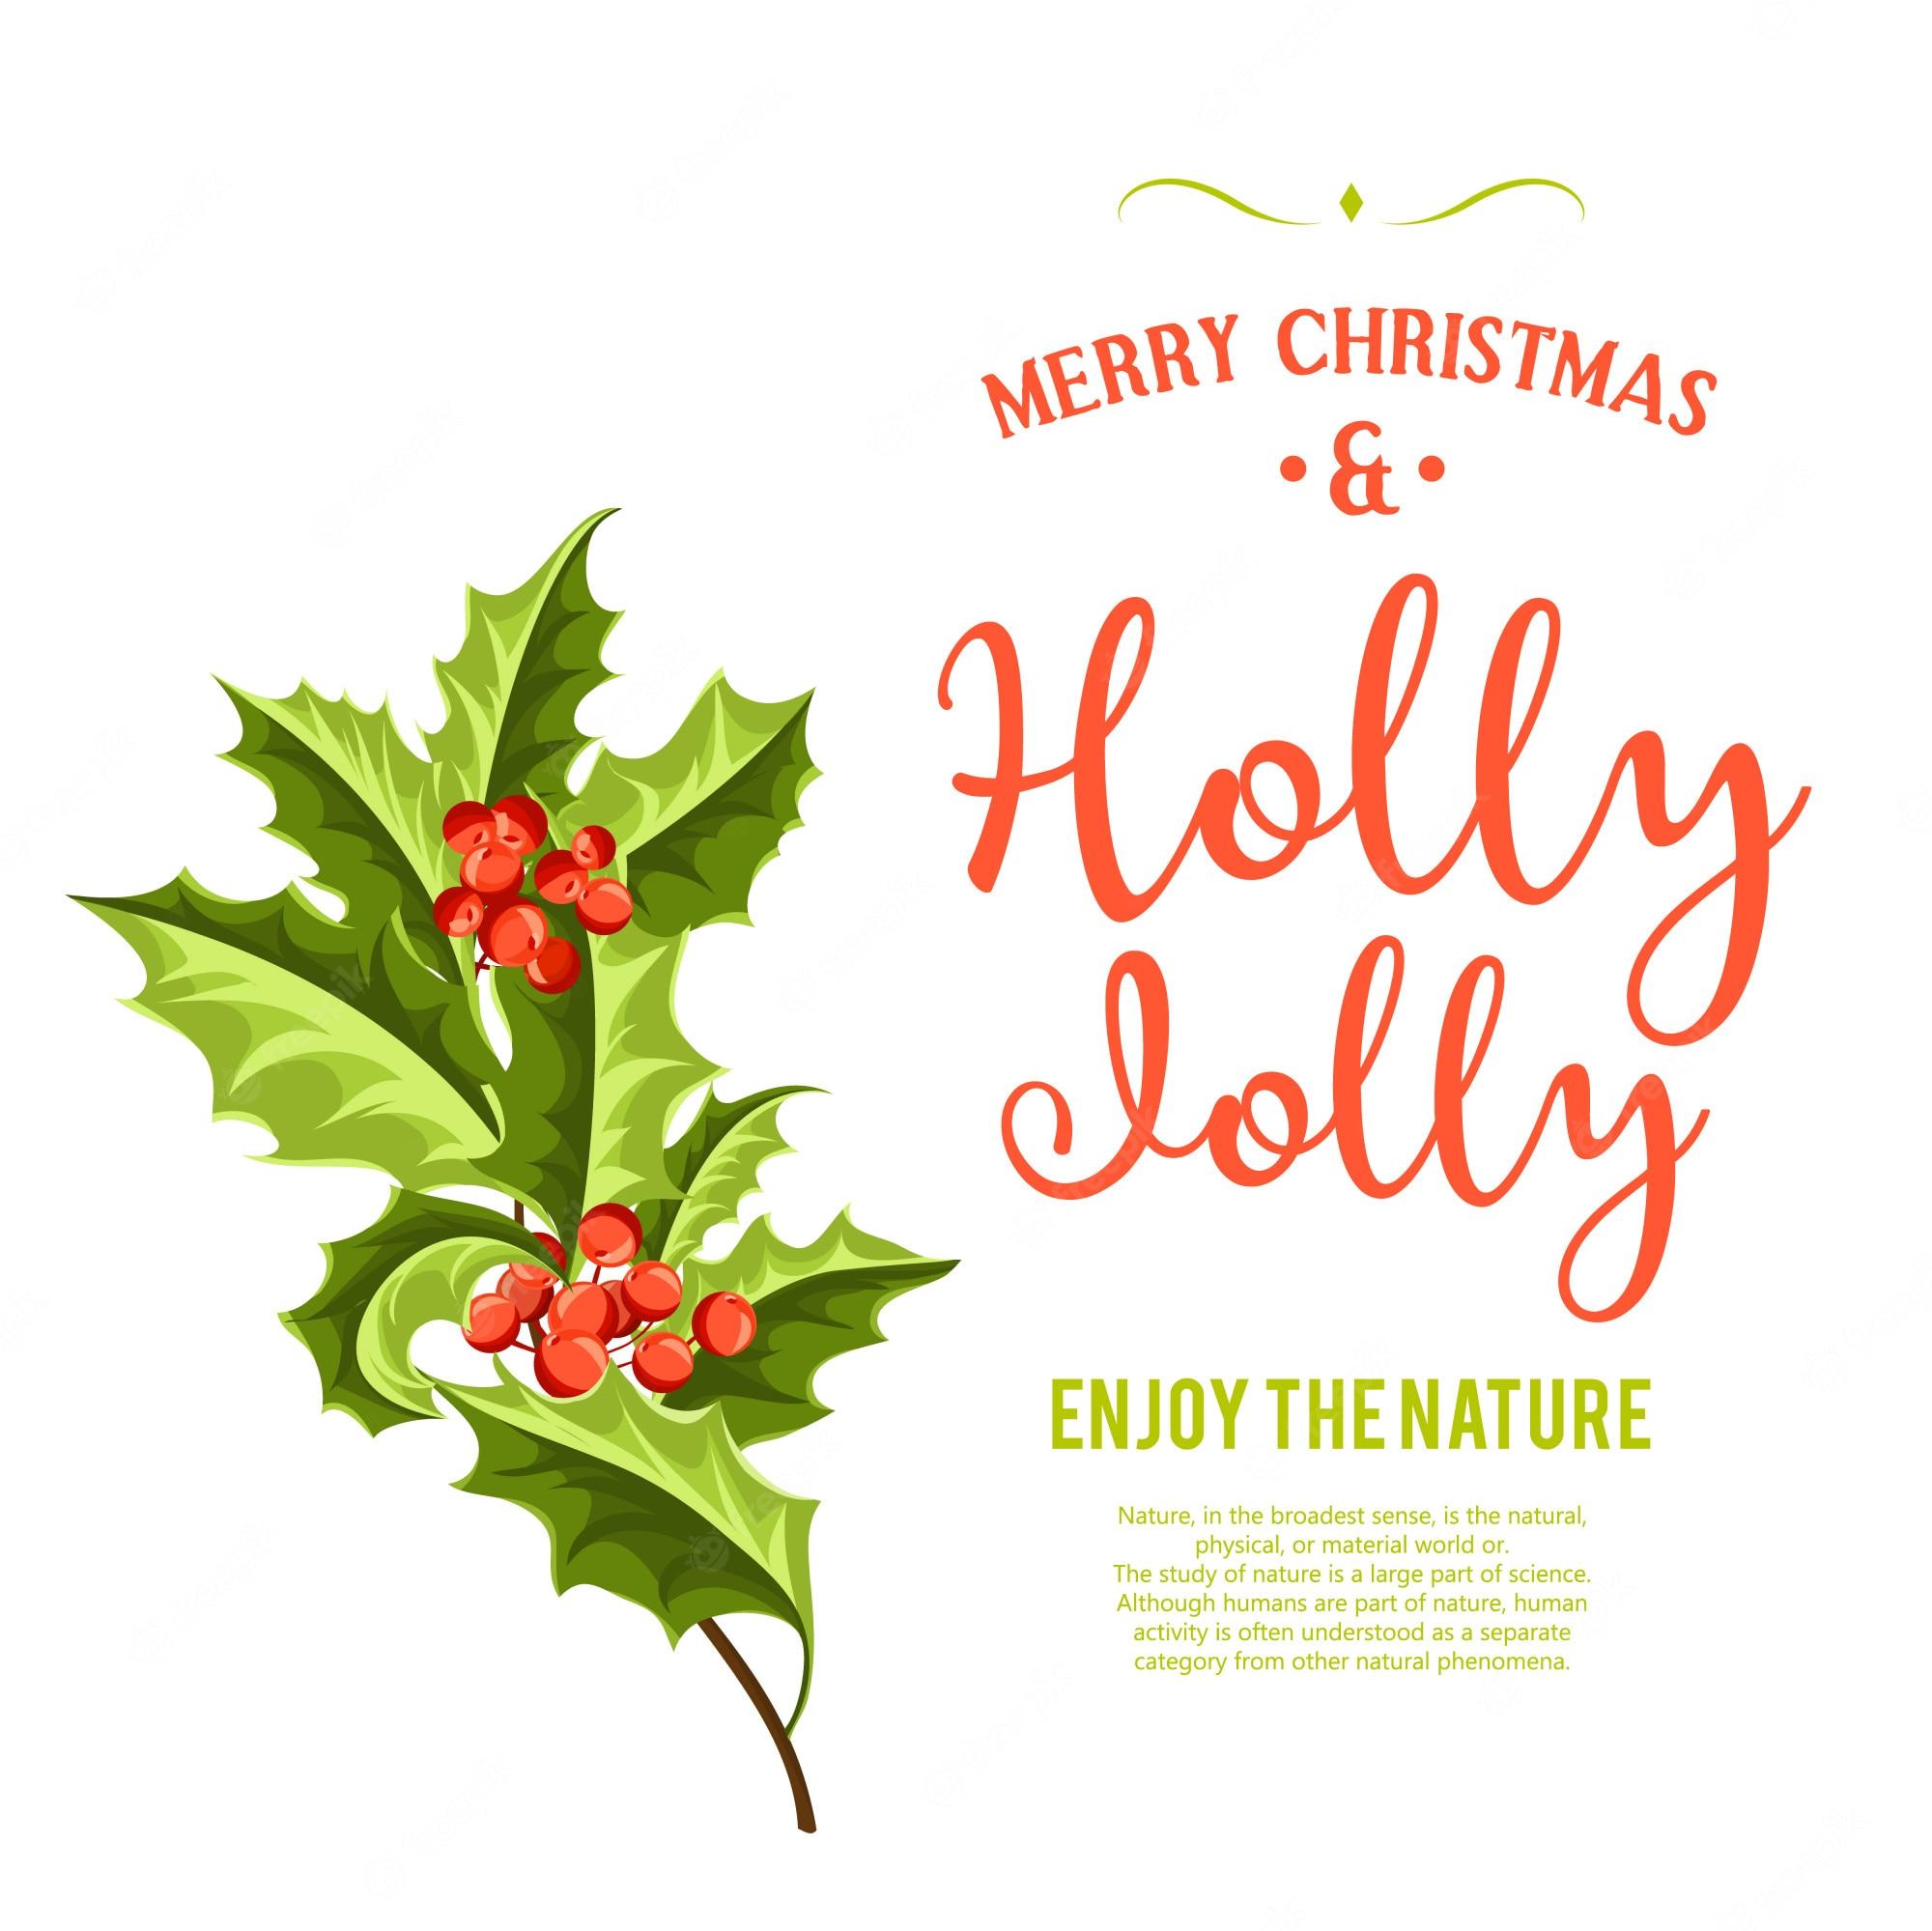 Holly Jolly Christmas Image Vectors Stock Photos Psd